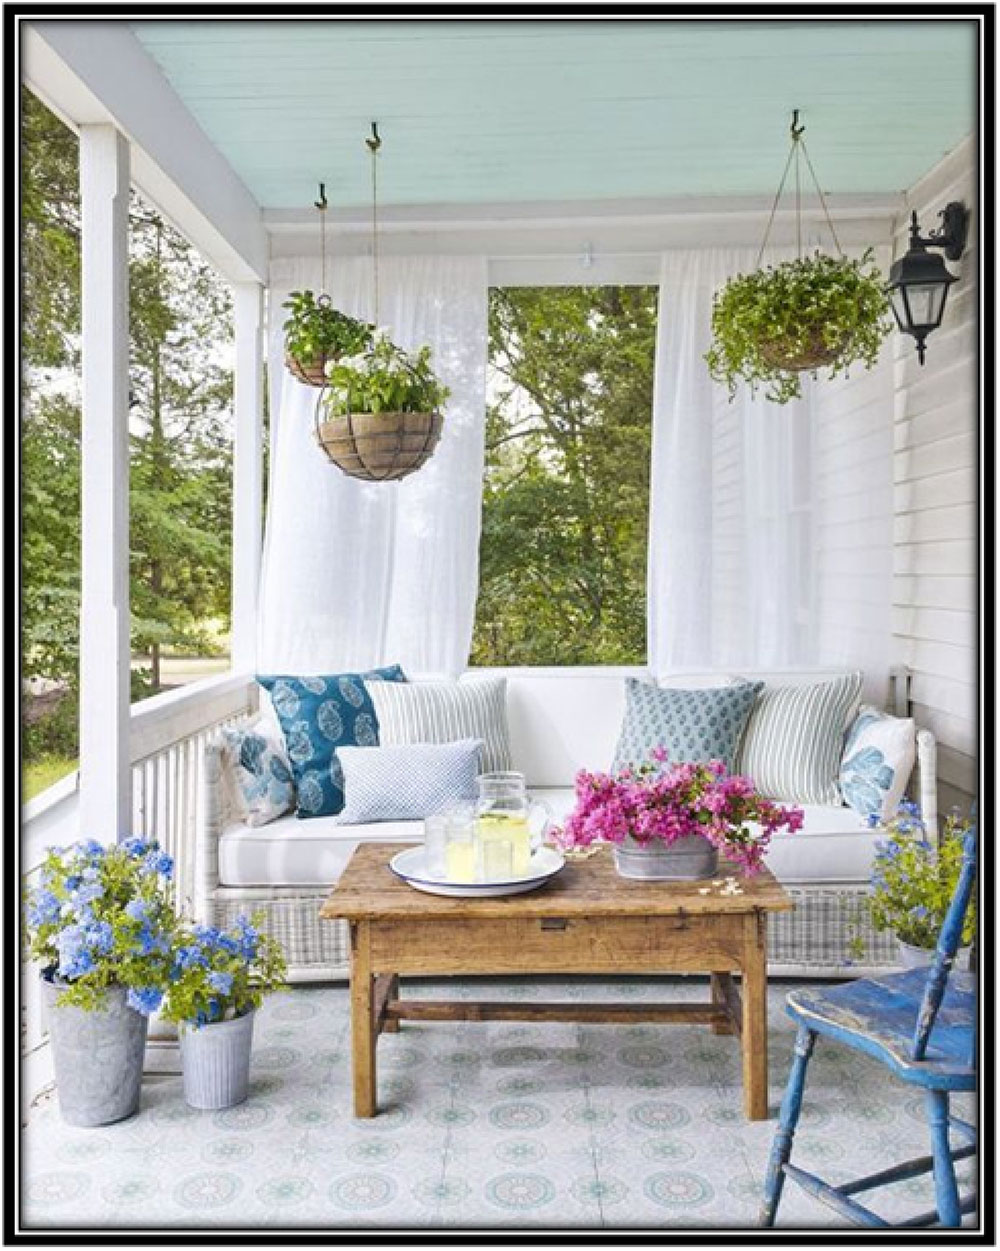 For a fresh summer look - Home decor ideas